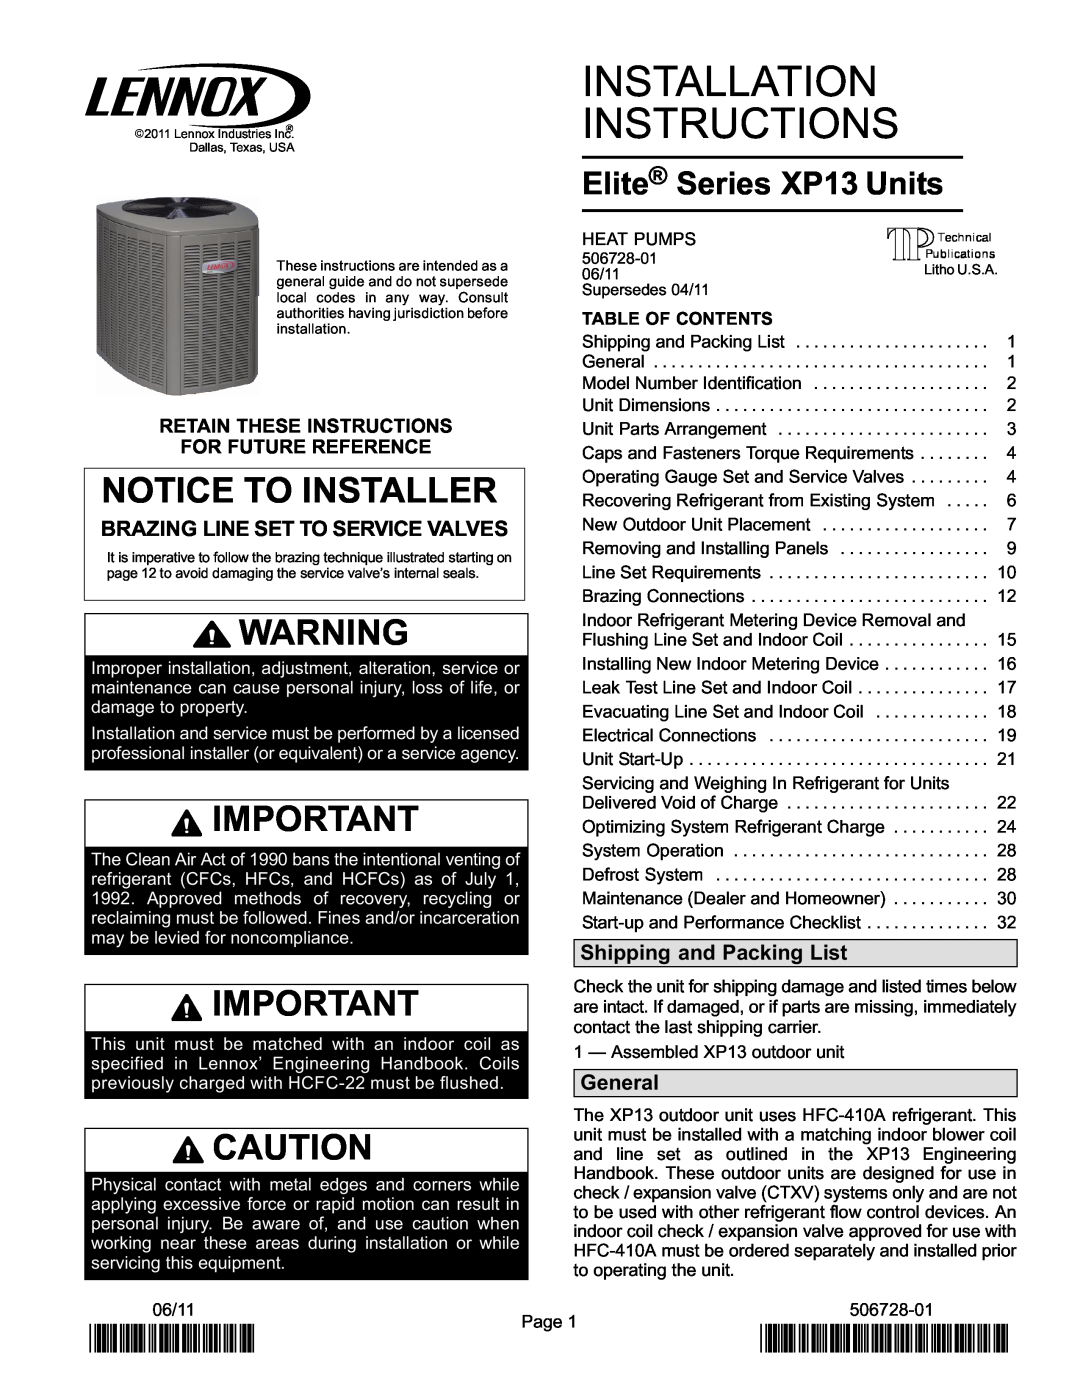 Lennox International Inc LENNOX Elite Series XP13 Units HEAT PUMPS installation instructions Notice To Installer, 2P0611 